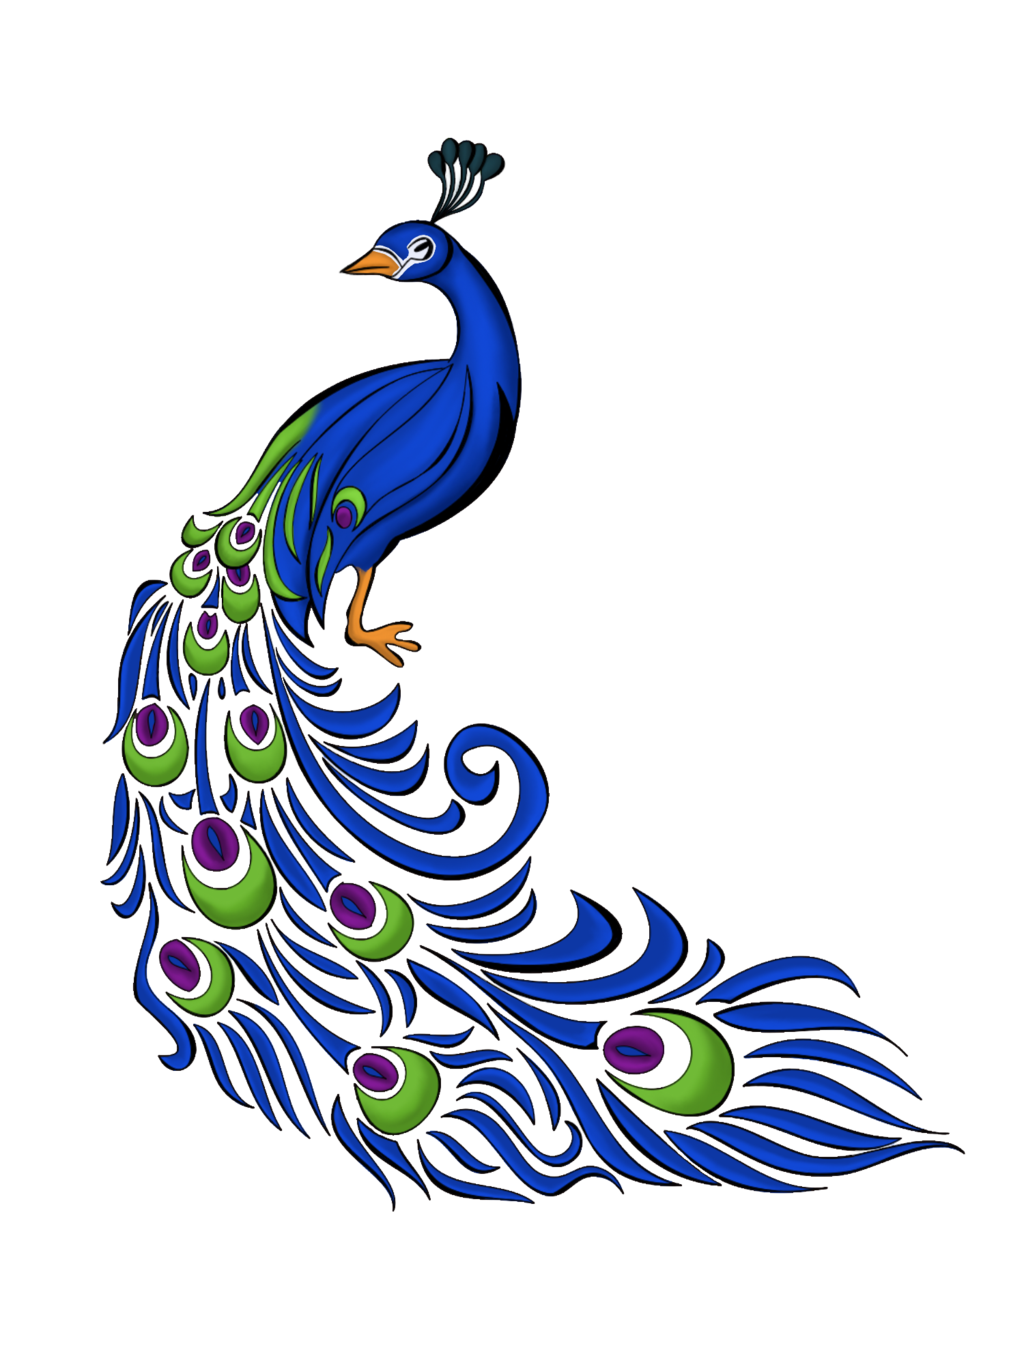 The Peacock's Dance